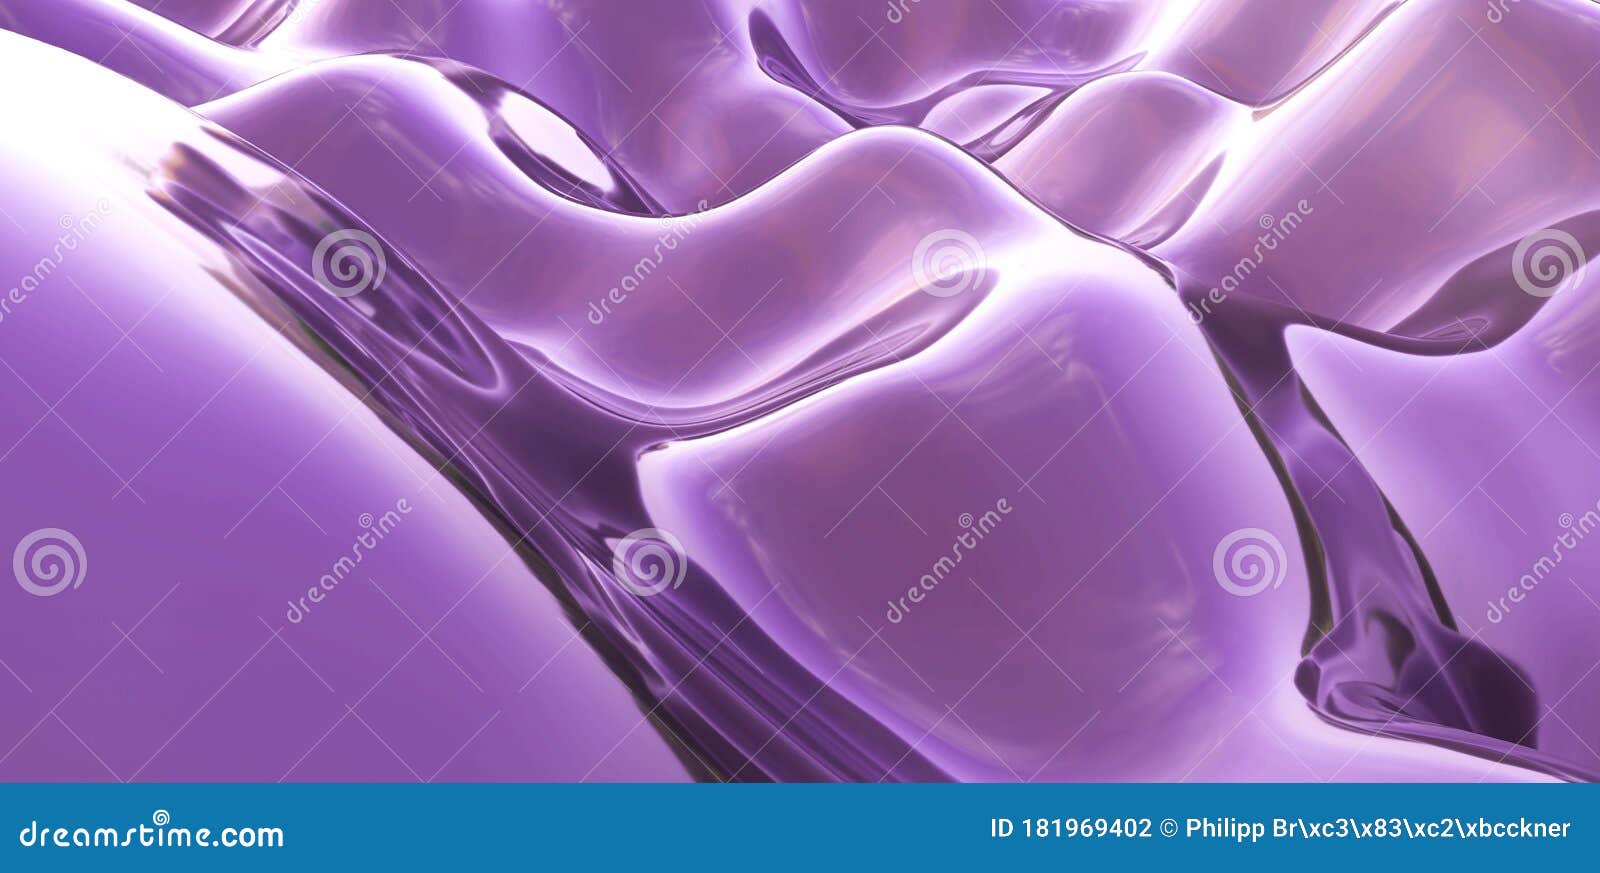 Fluid a violet Pleural fluid